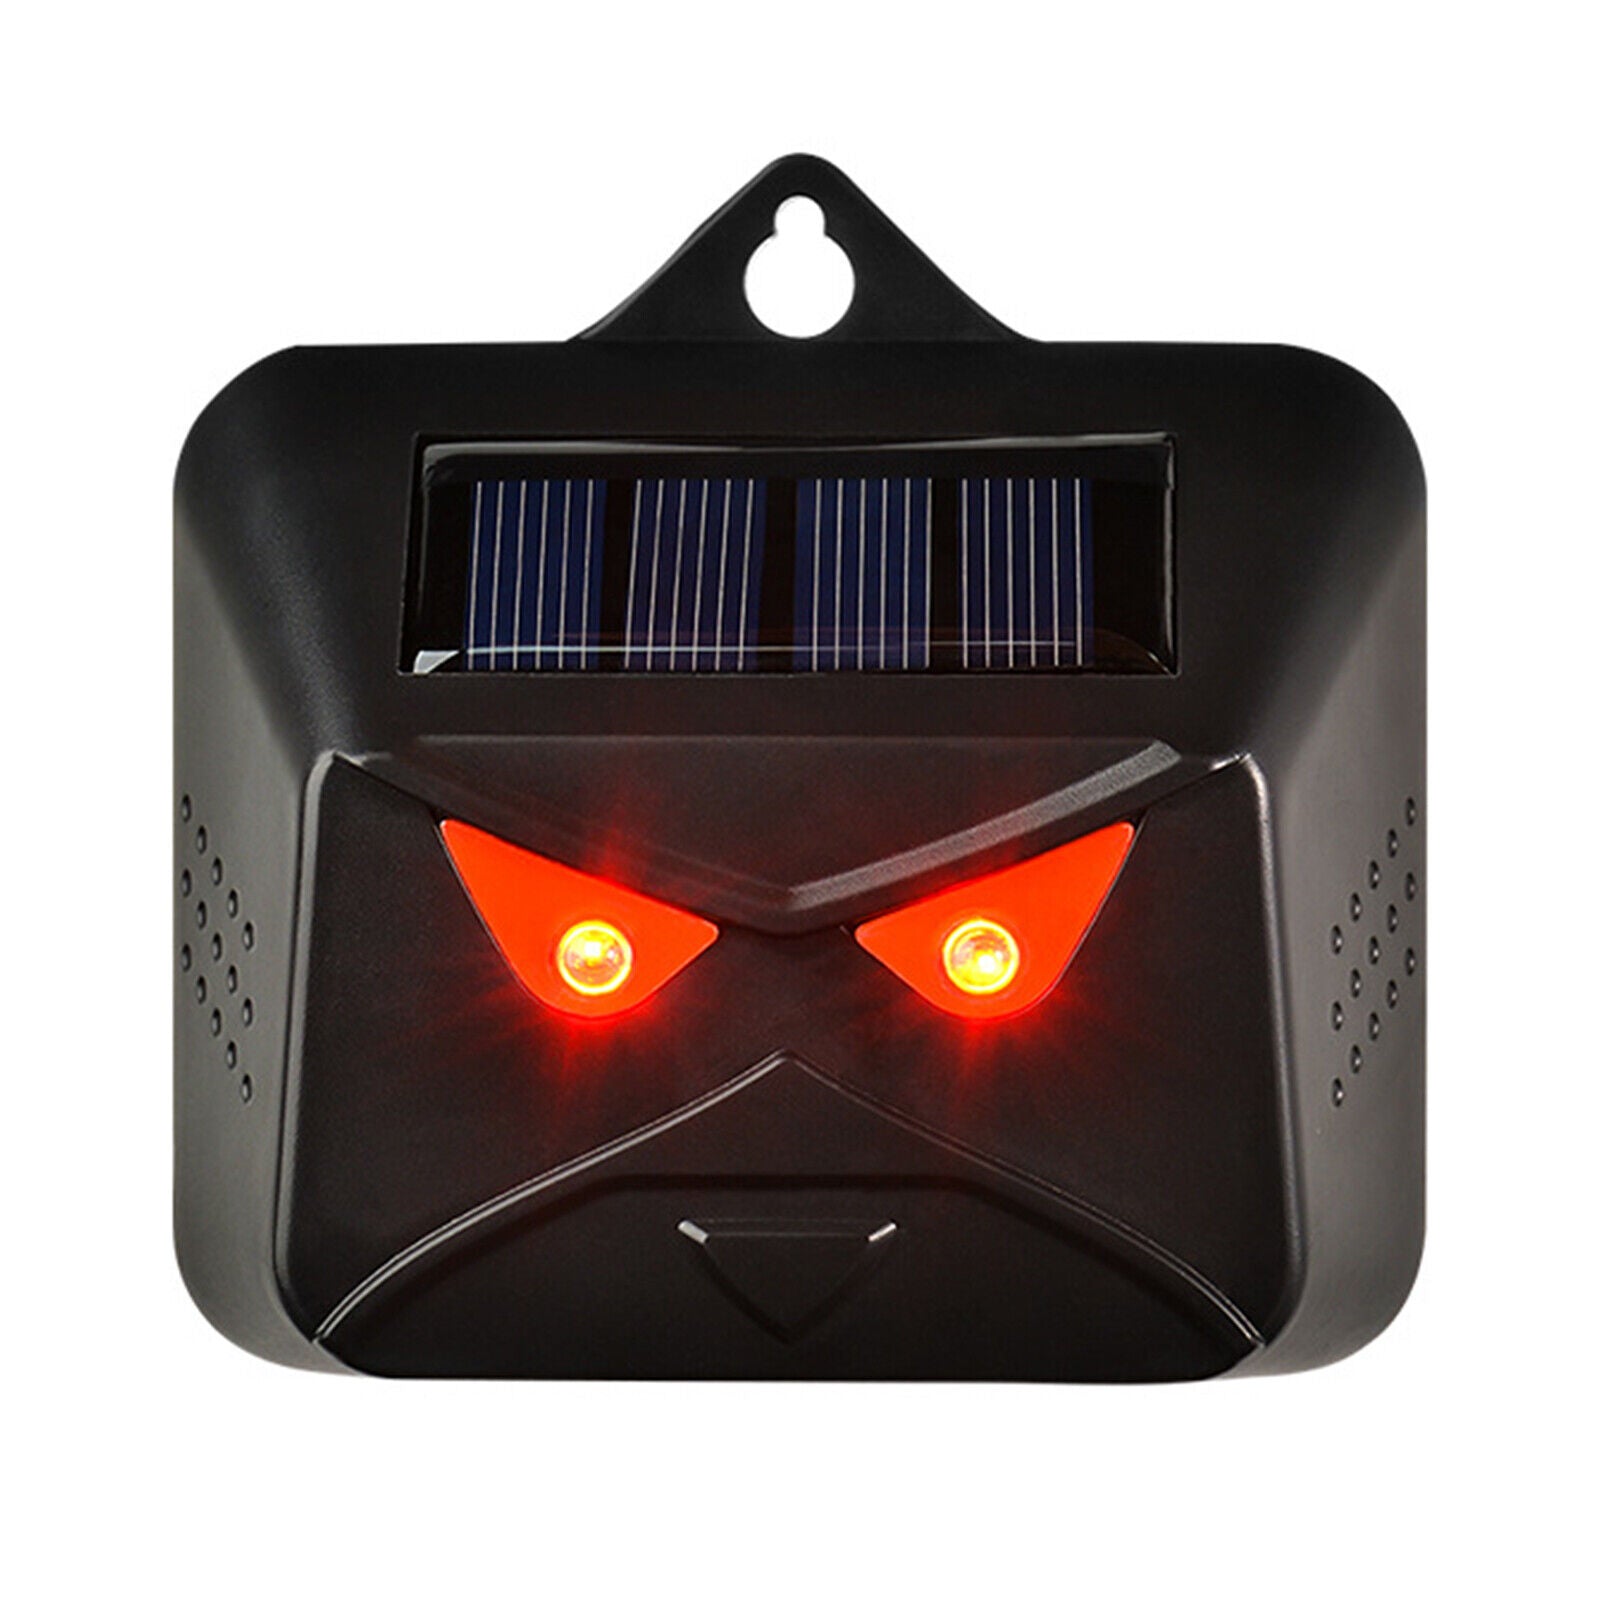 2pcs Solar Animals Repeller Red LED Nocturnal Predator Deterrent Lights Devices